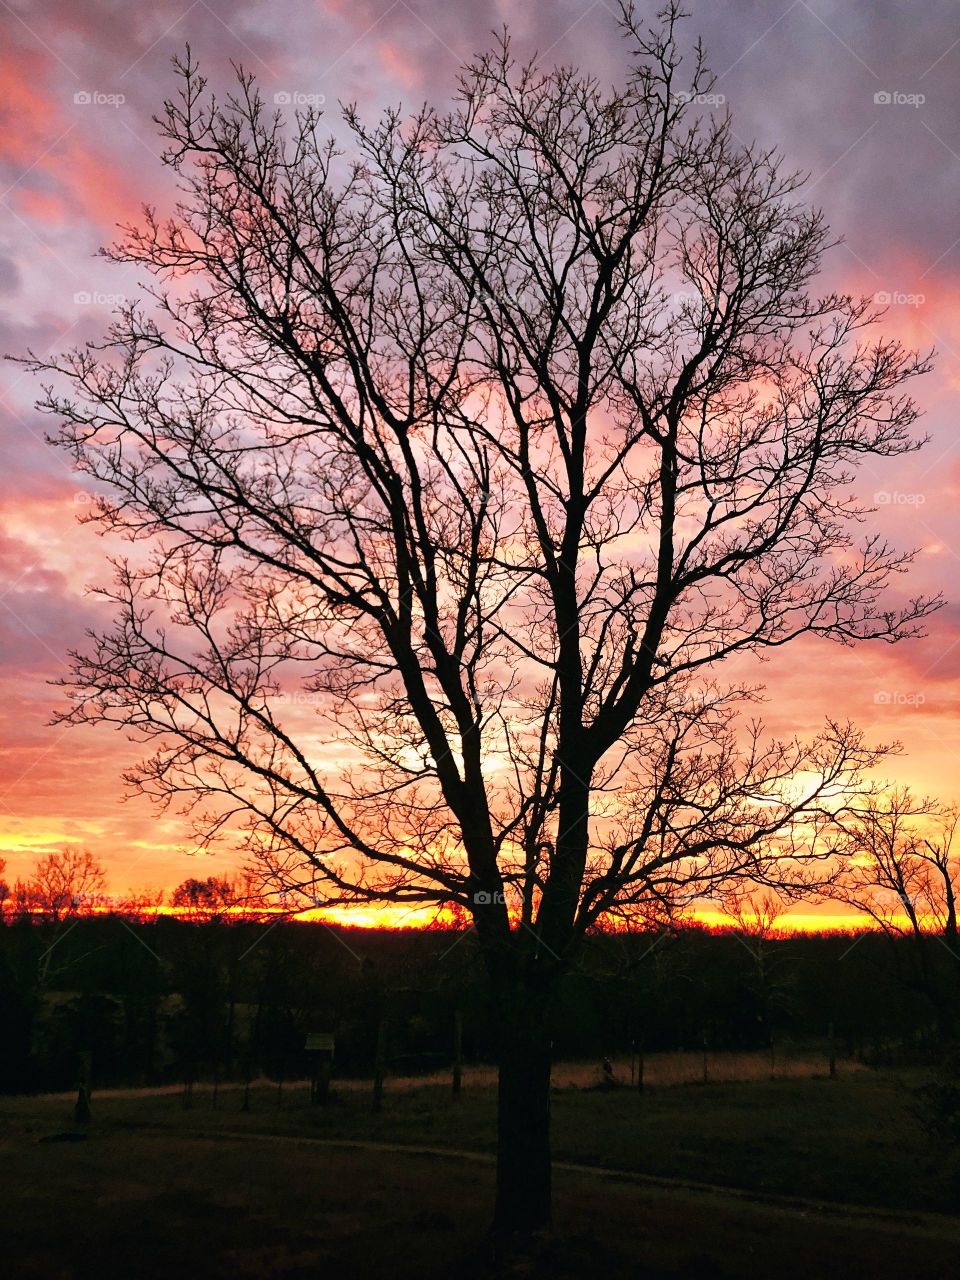 Bare tree with sunrise